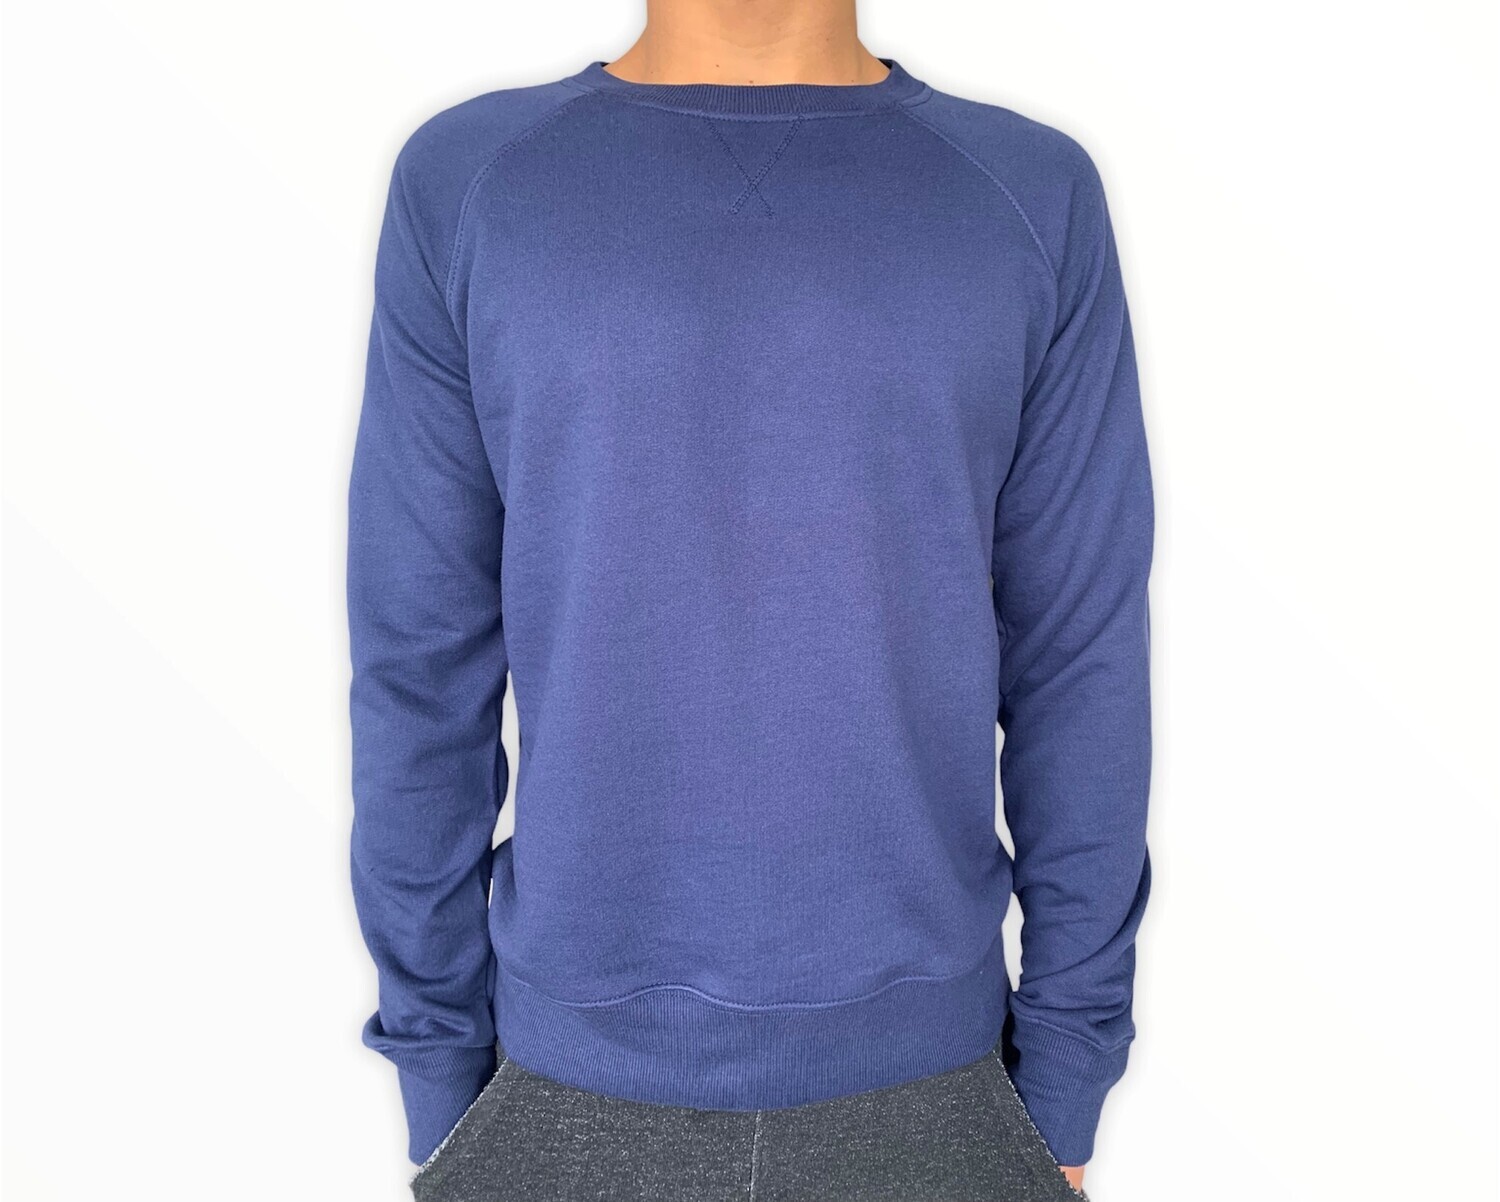 Sweatshirt Unisex de Franela Perchada - Bleu